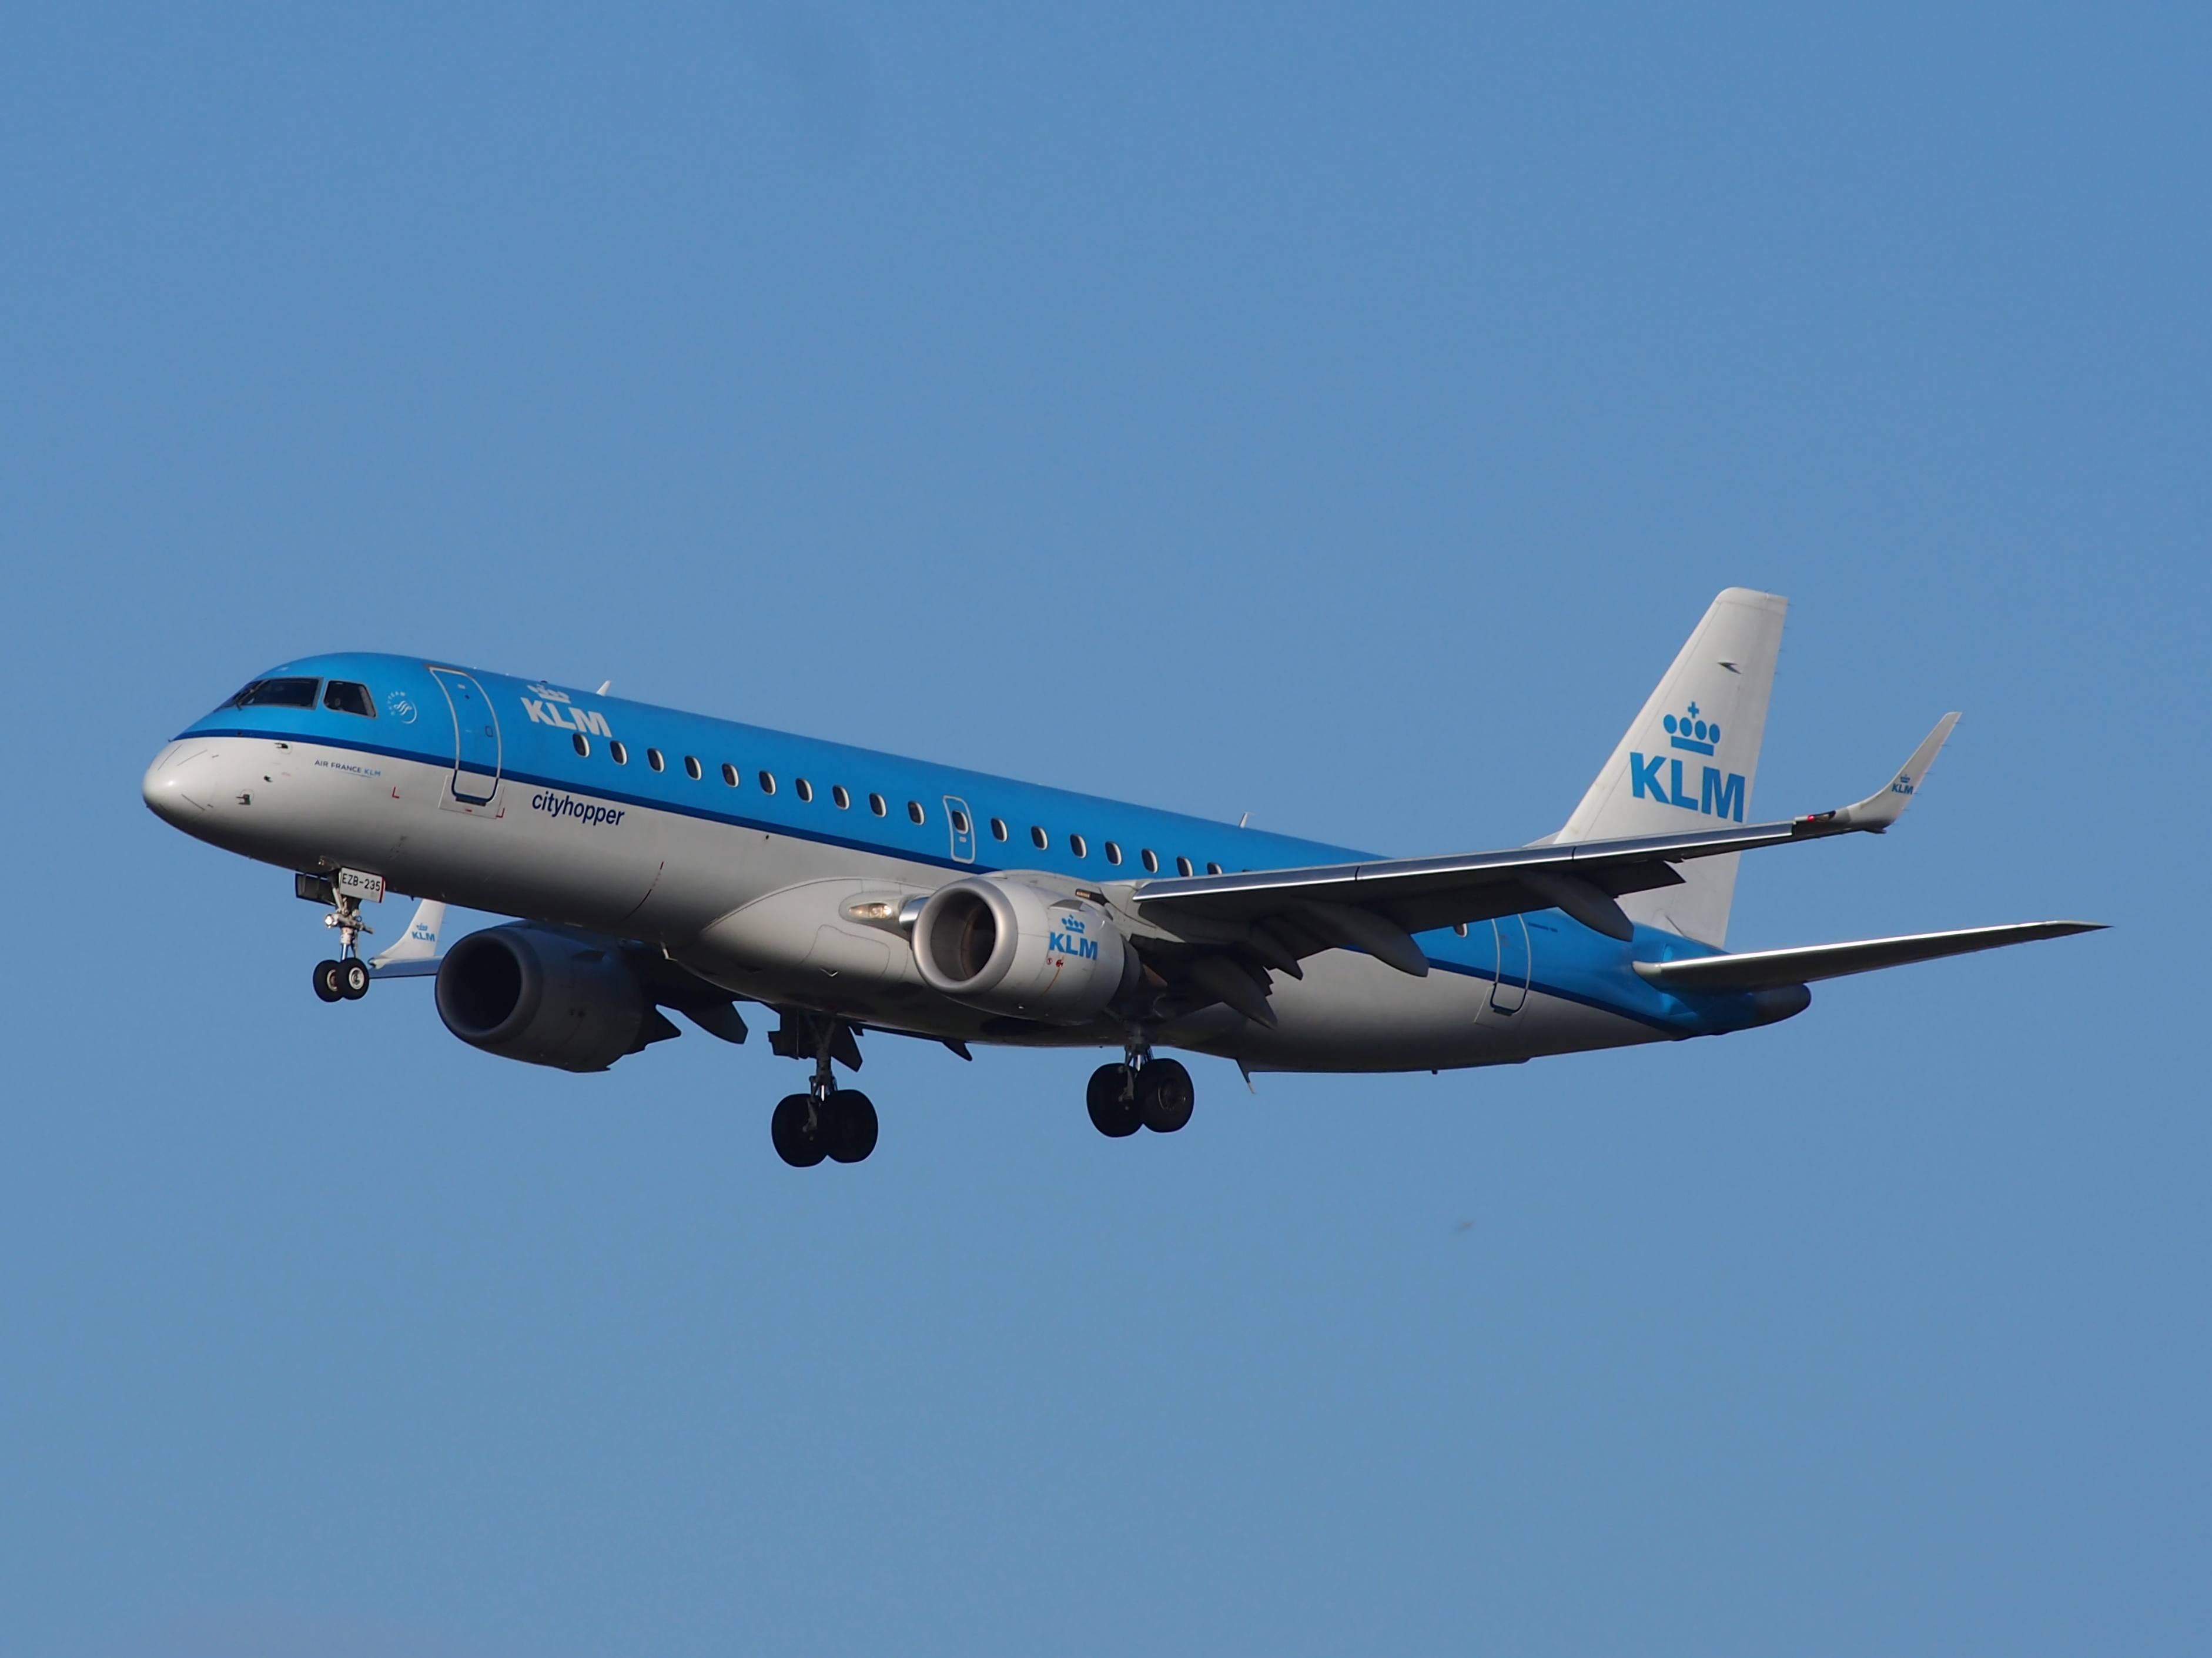 PH-EZB, landing at Schiphol on 2Feb2014 pic12